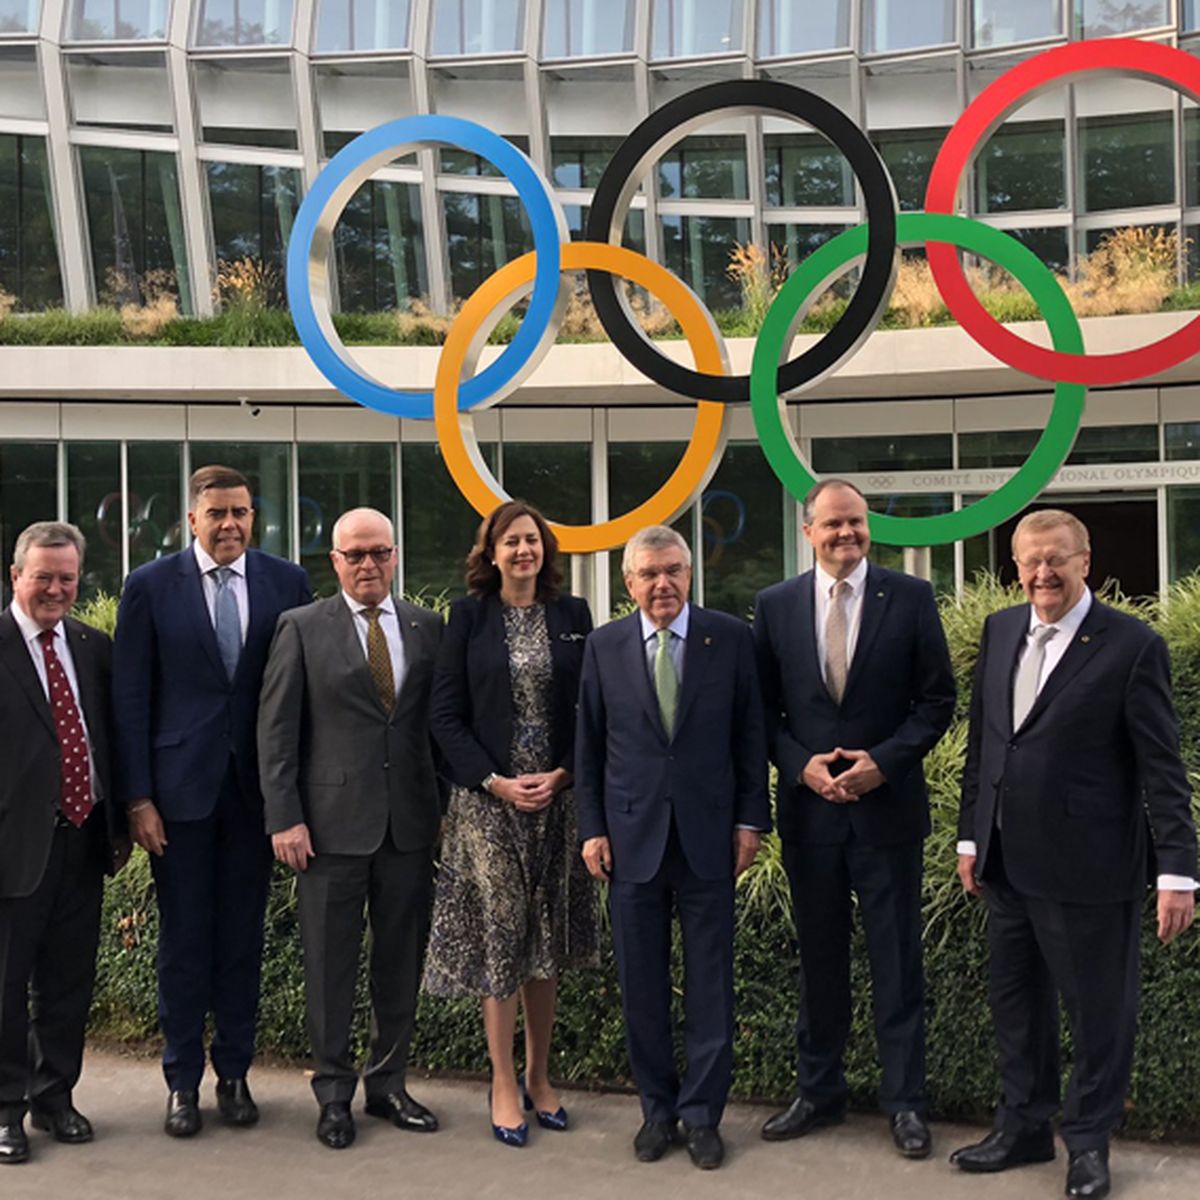 Queensland 2032 Olympics bid Annastacia Palaszcuk meets with IOC